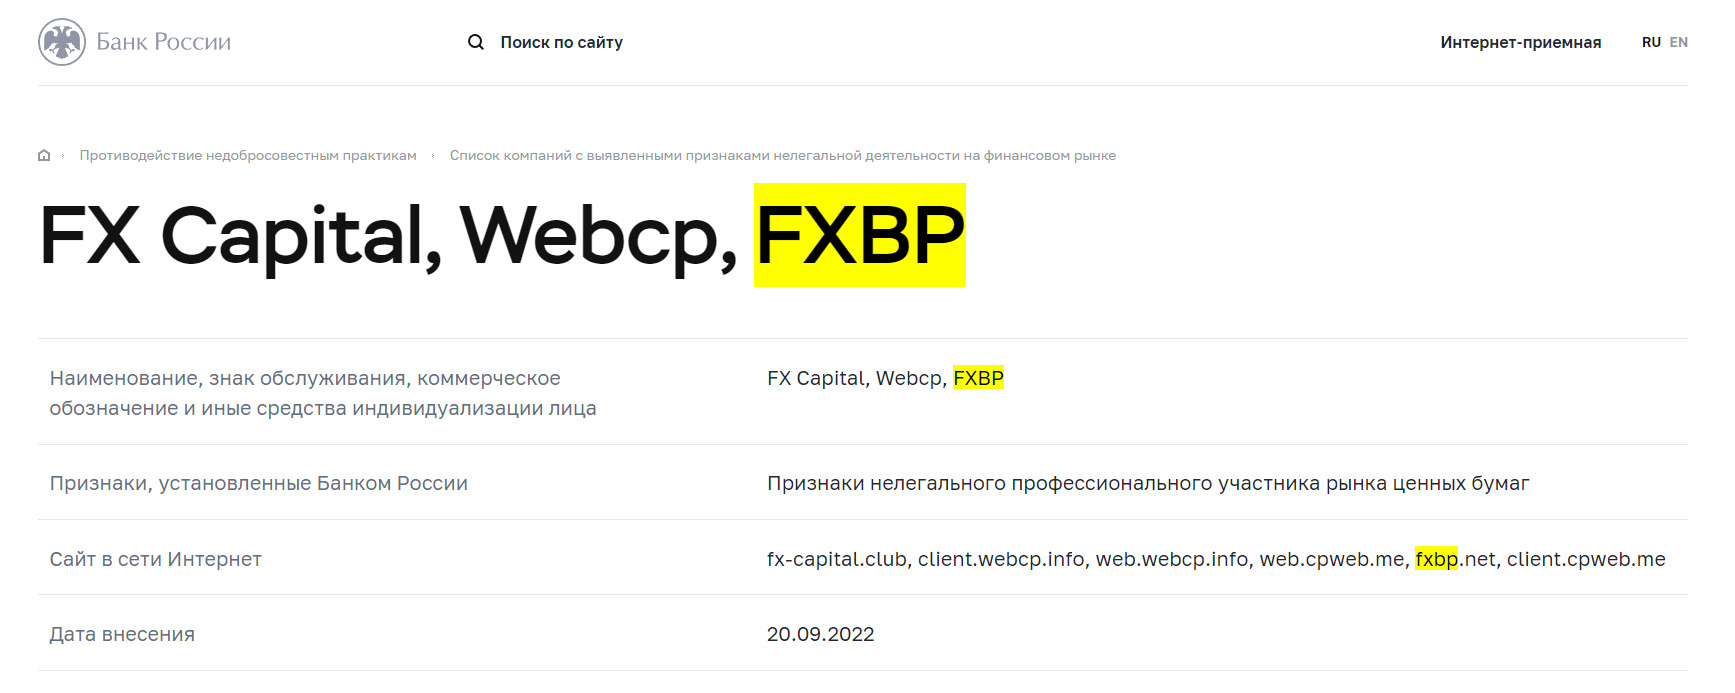 Проверка client.cppweb.me